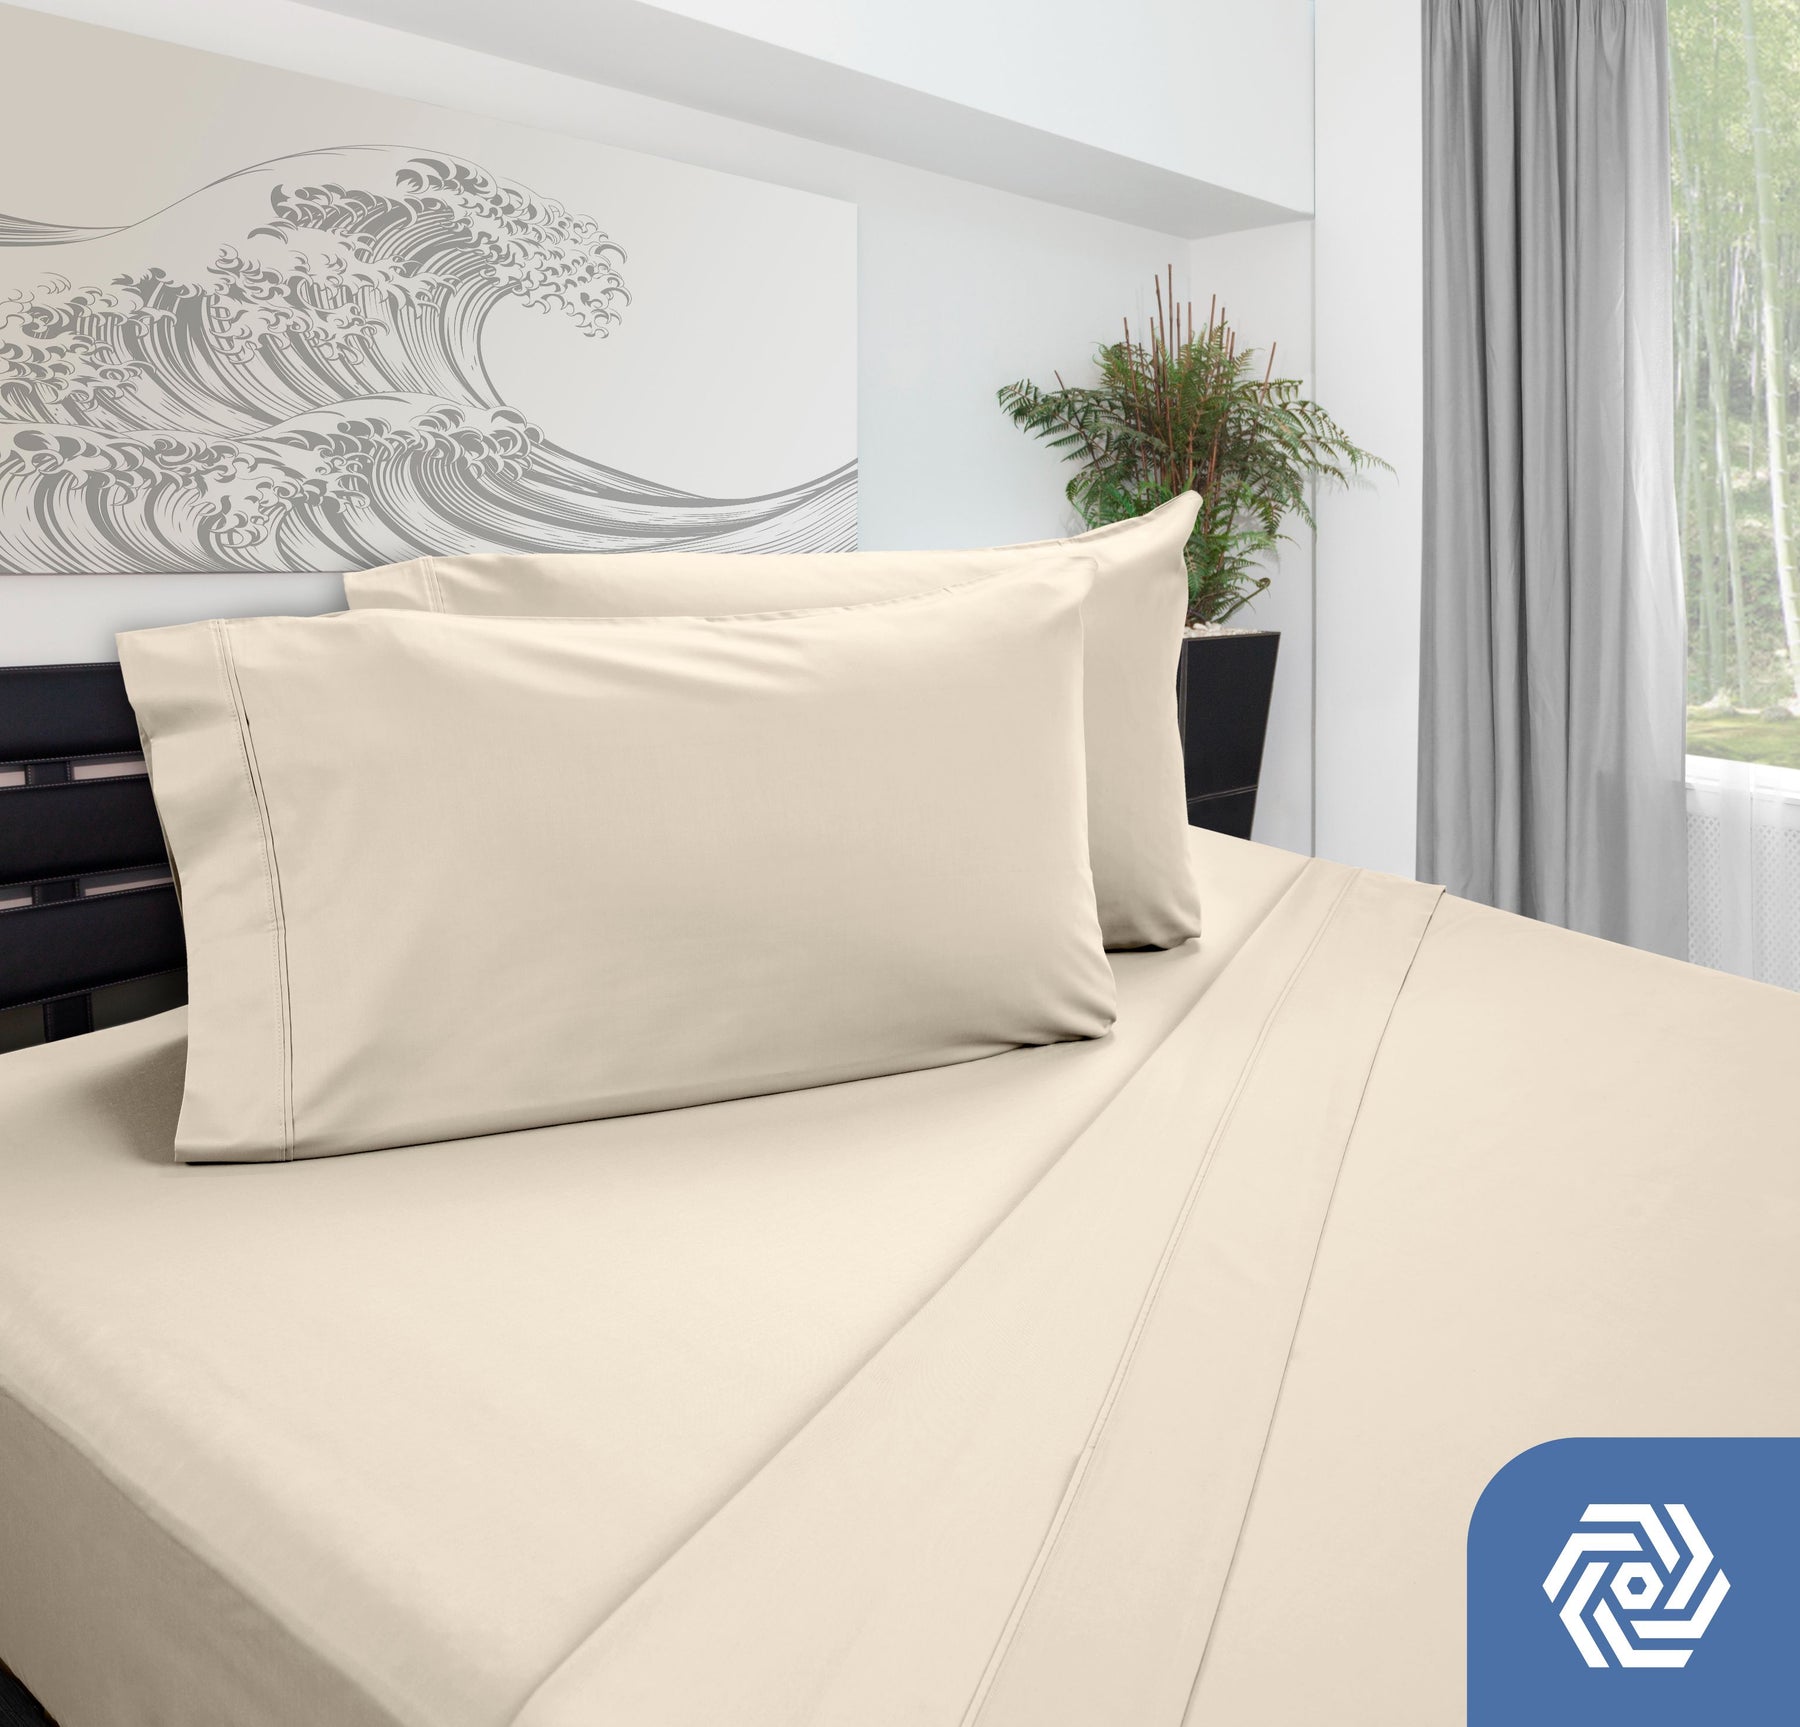 DreamFit Bamboo  Pillowcase Sets - Pair